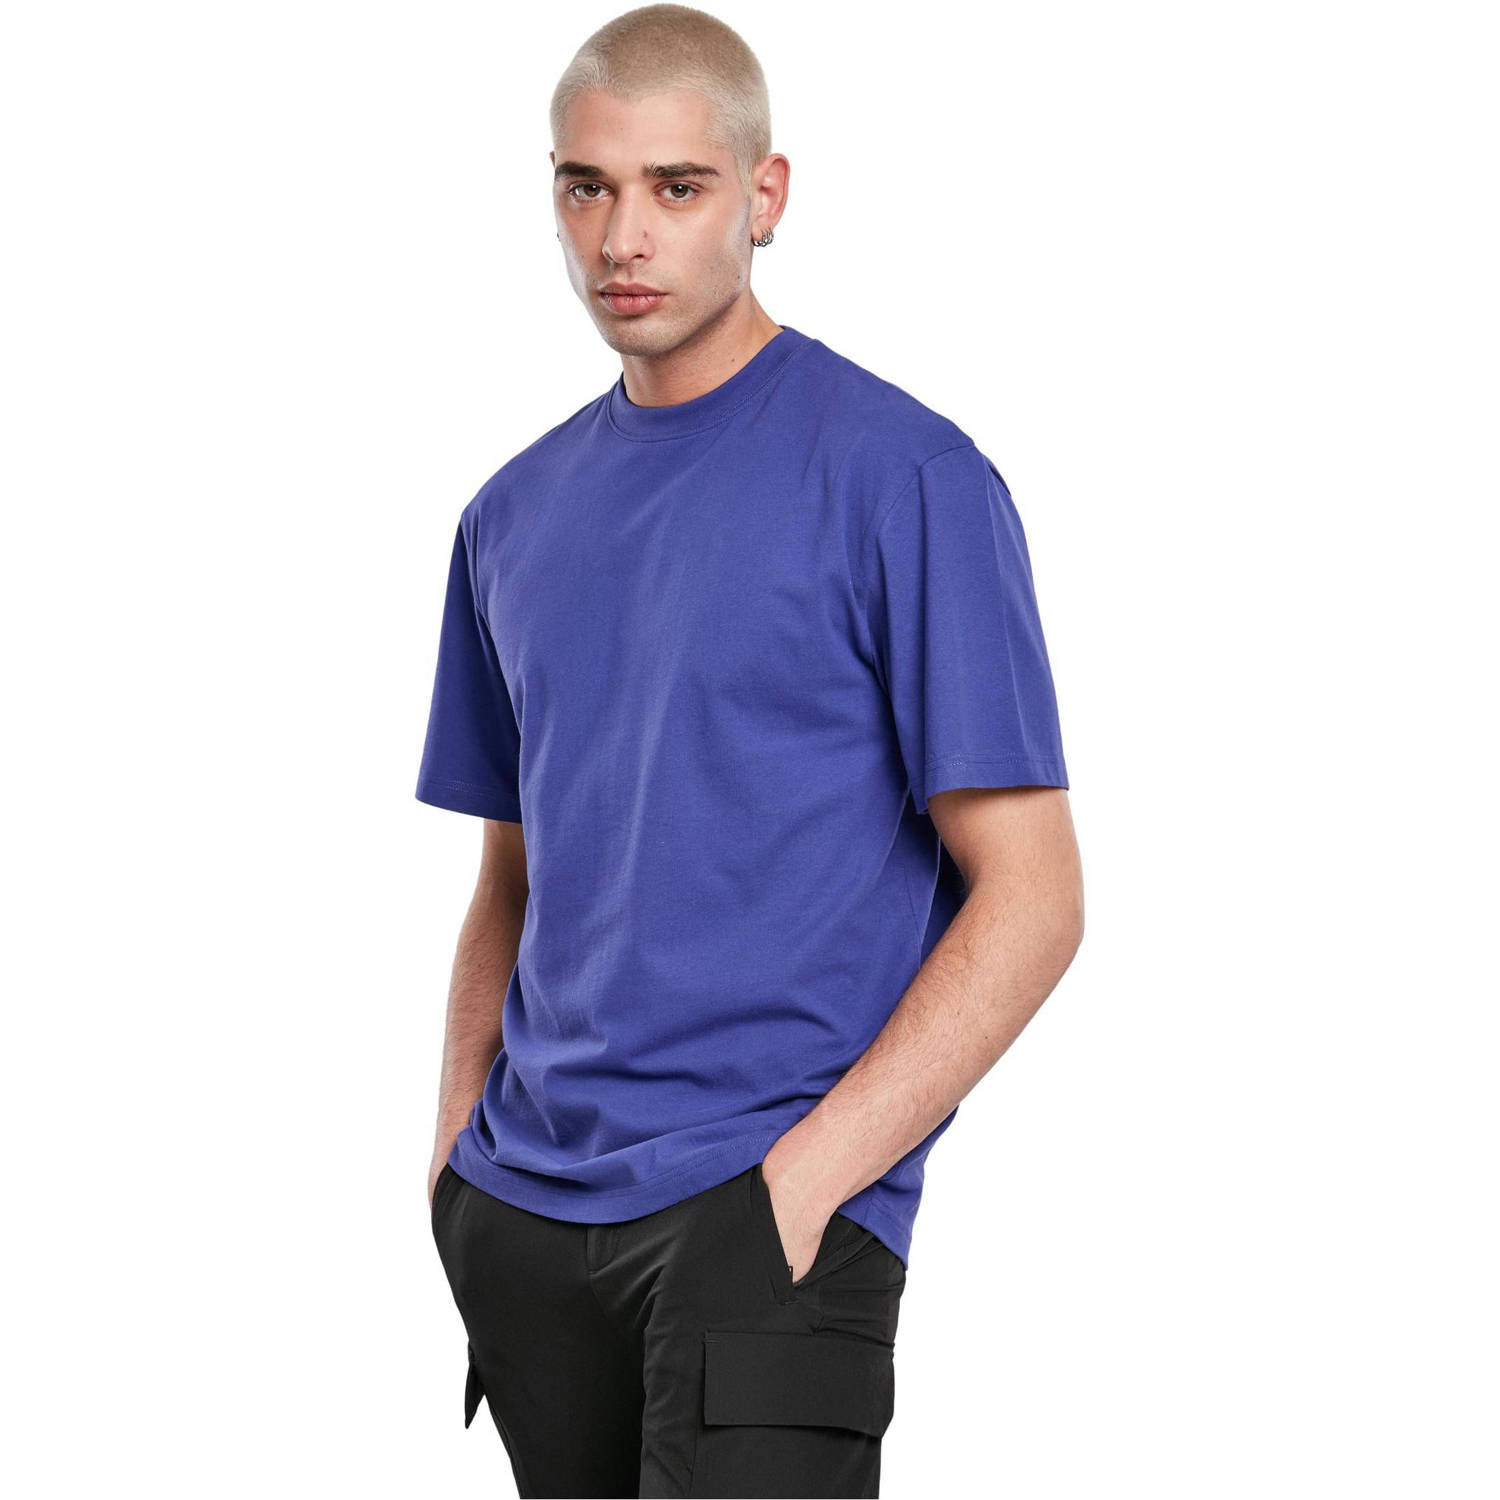 Urban Classics oversized T-shirt bluepurple